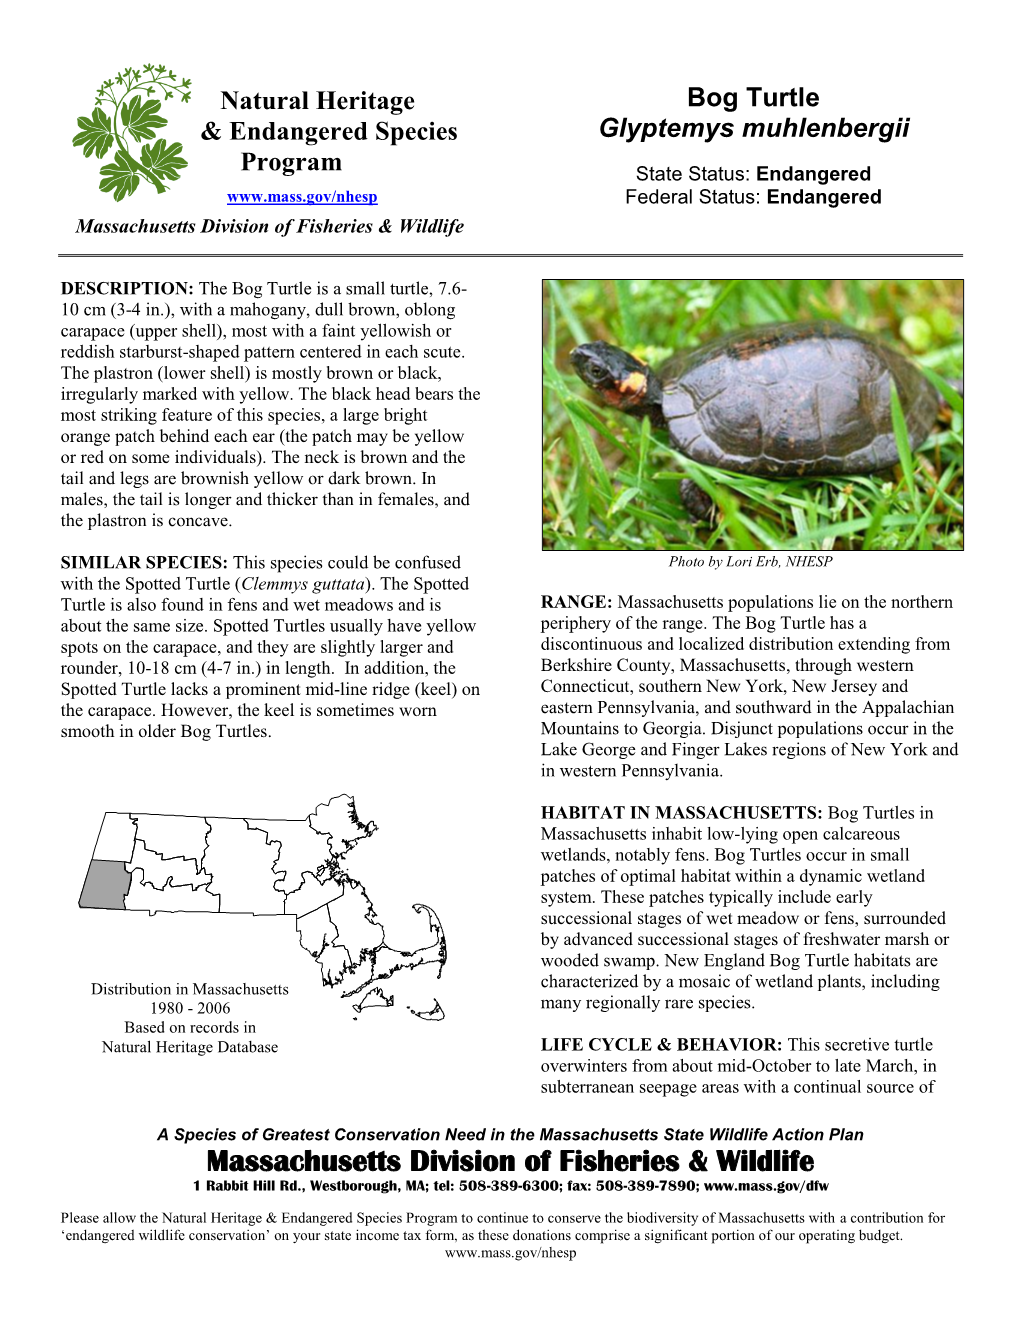 Bog Turtle (Glyptemys Muhlenbergii)